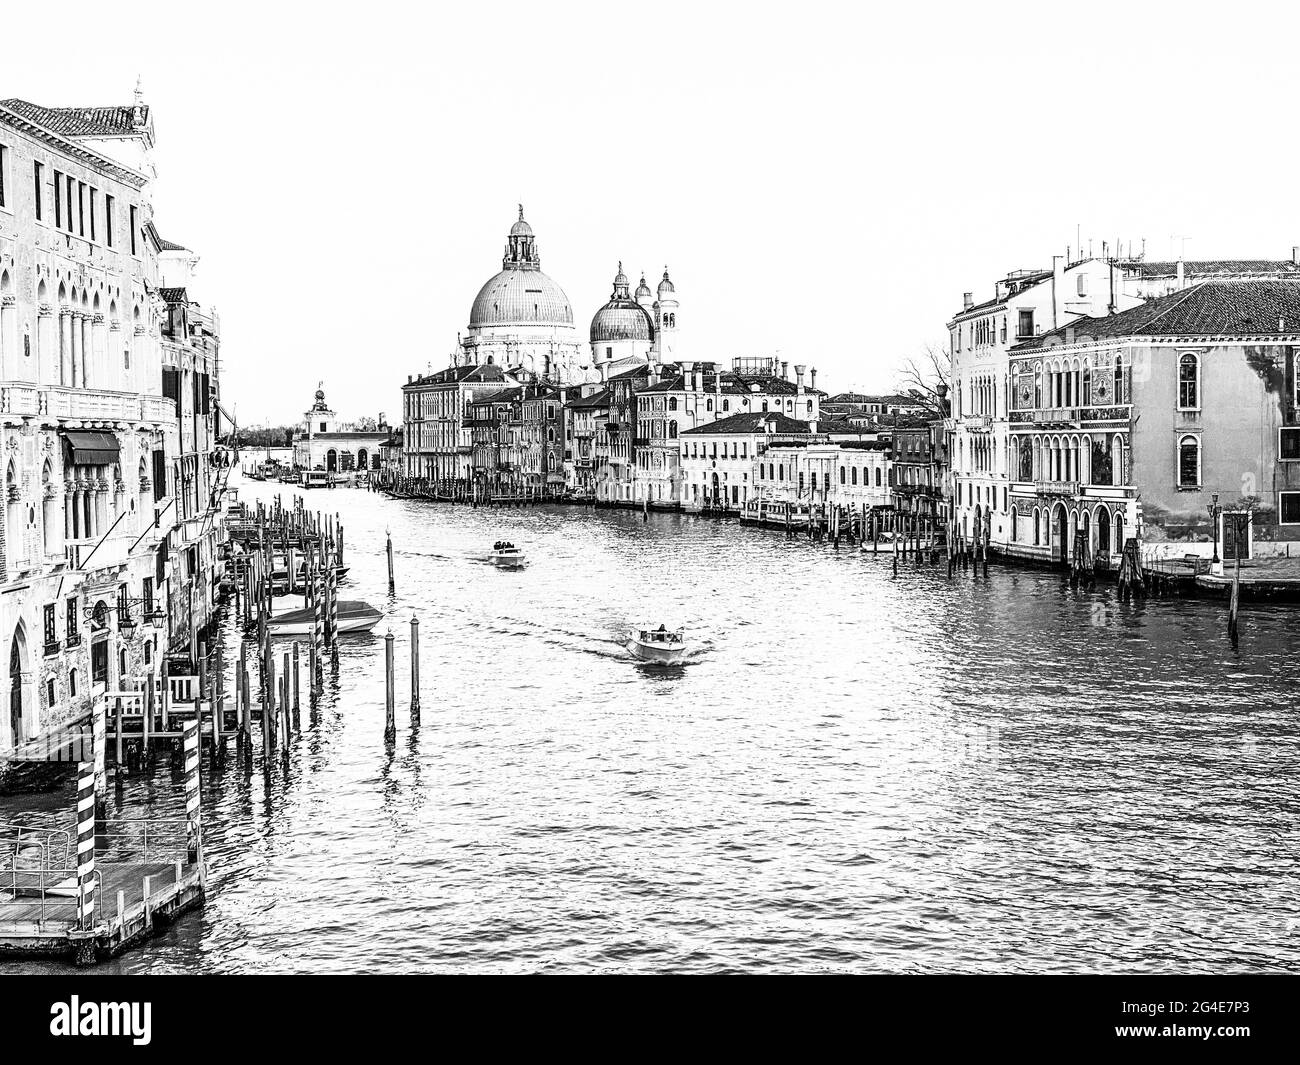 View of the Grand Canal and Basilica Santa Maria della Salute from the Ponte dell'Accademia in Venice, Italy Stock Photo